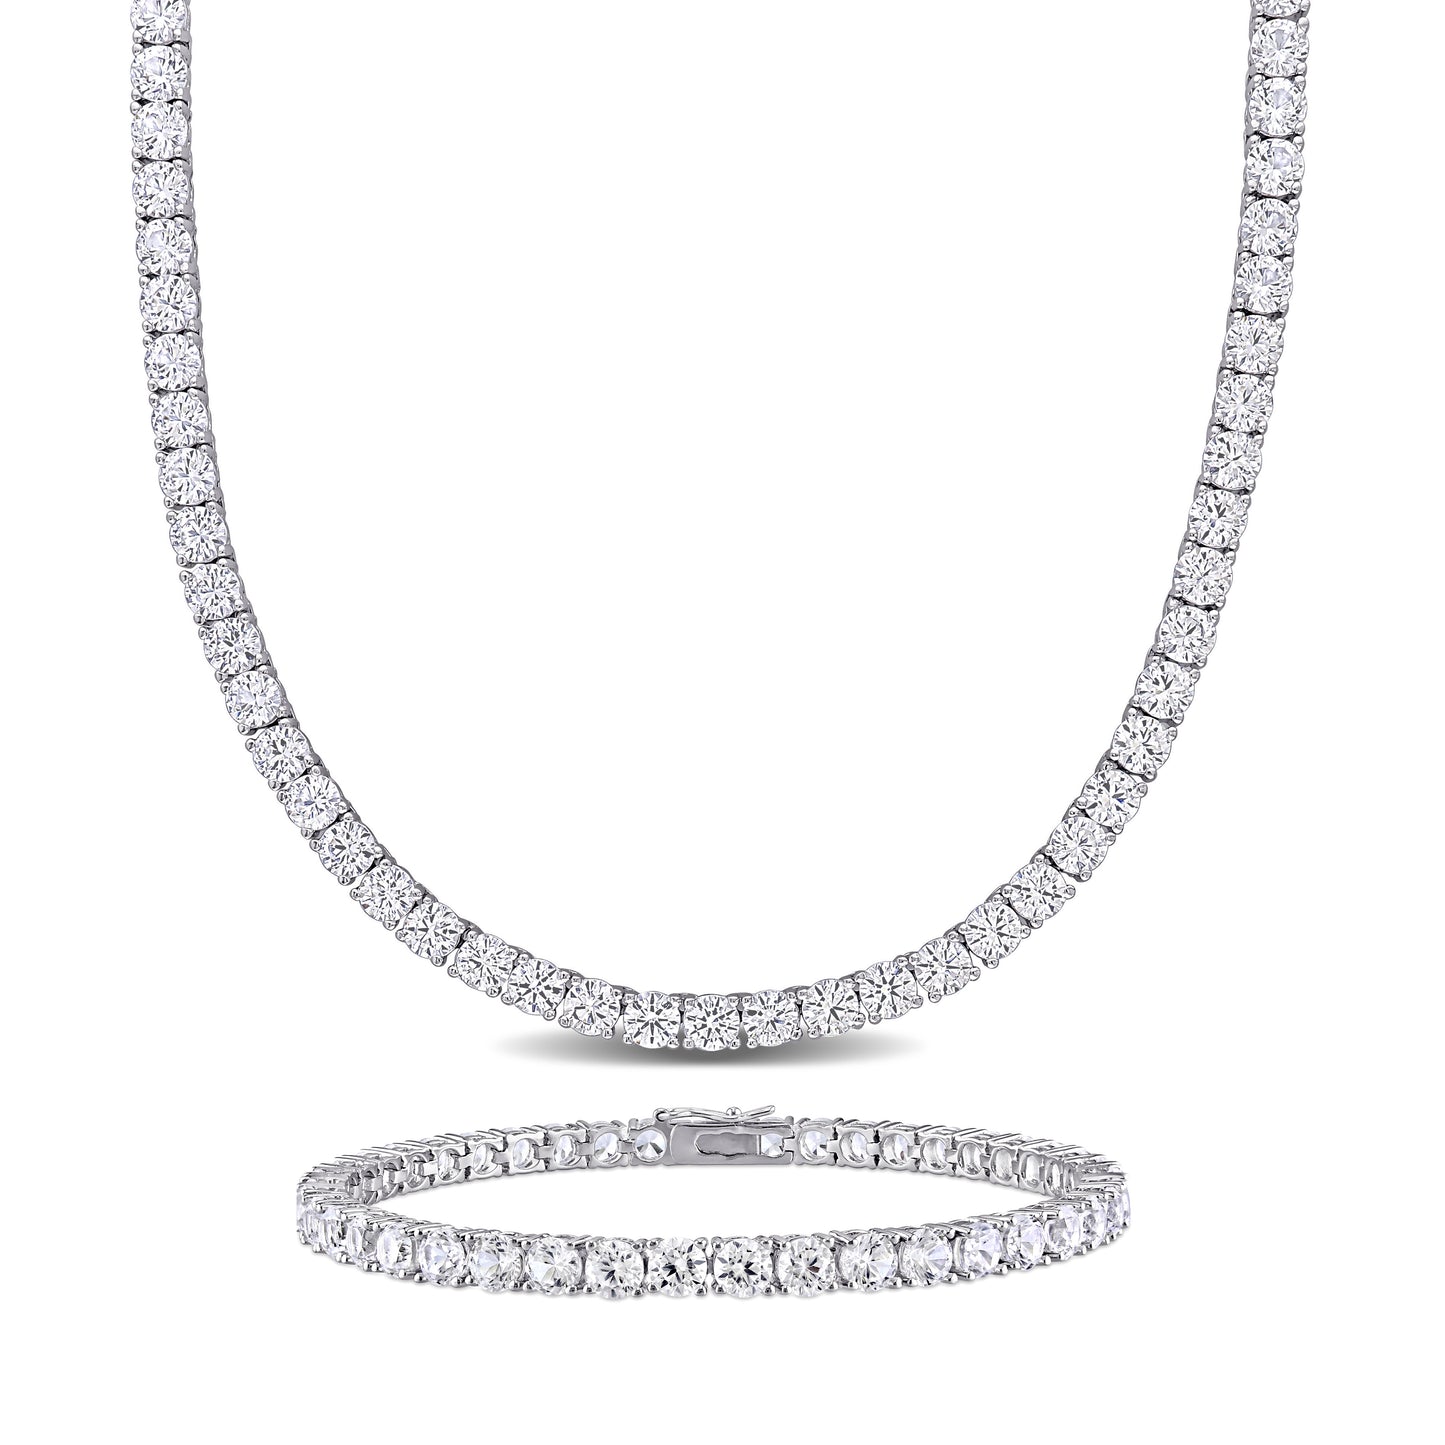 47 1/4 ct TGW Created white sapphire silver bracelet & necklace set